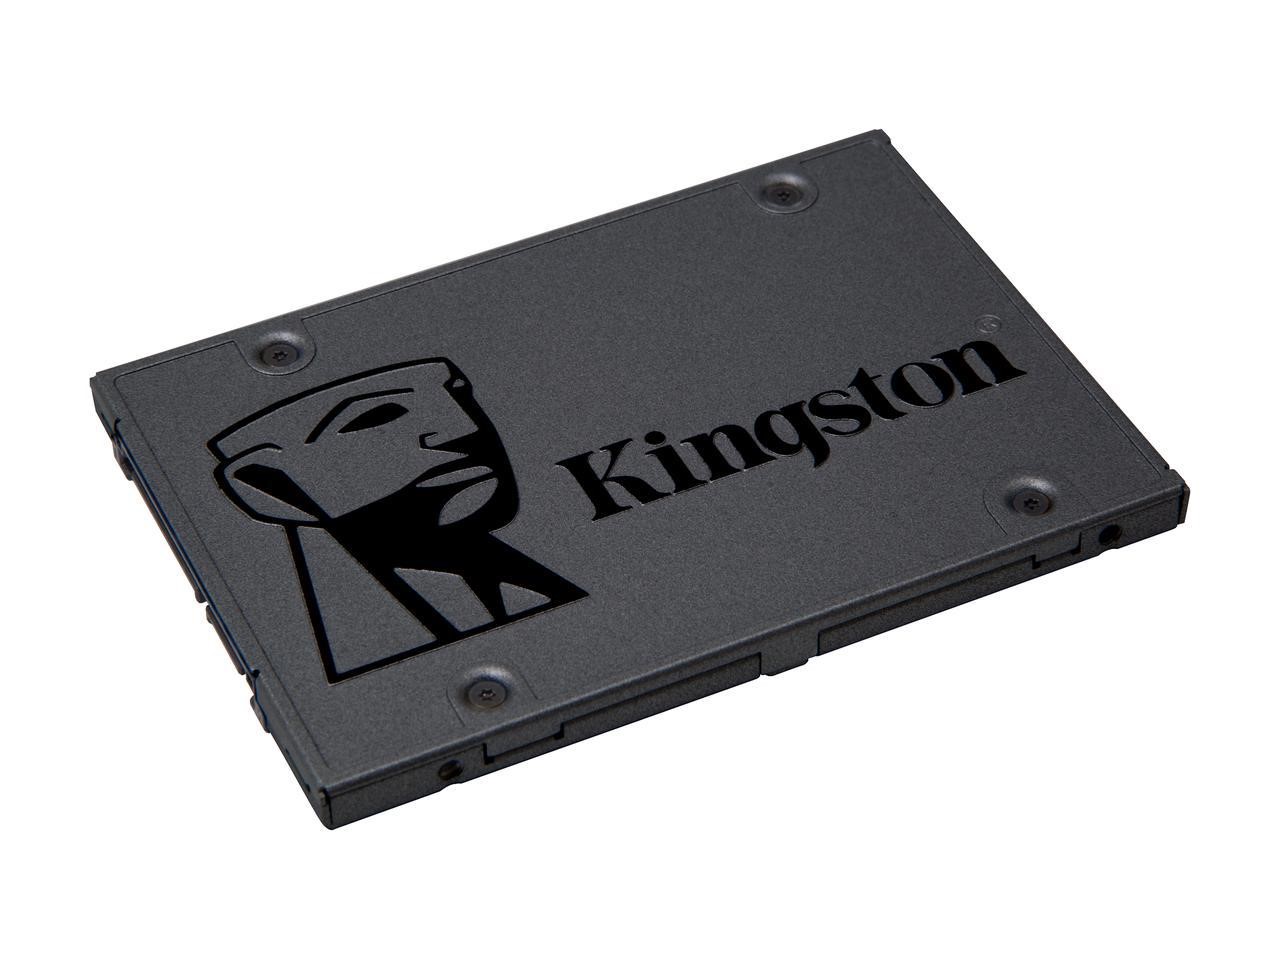 KINGSTON SSDNOW A400 480 GB 2.5" SATA3 SSD 500/450 (SA400S37/480G)